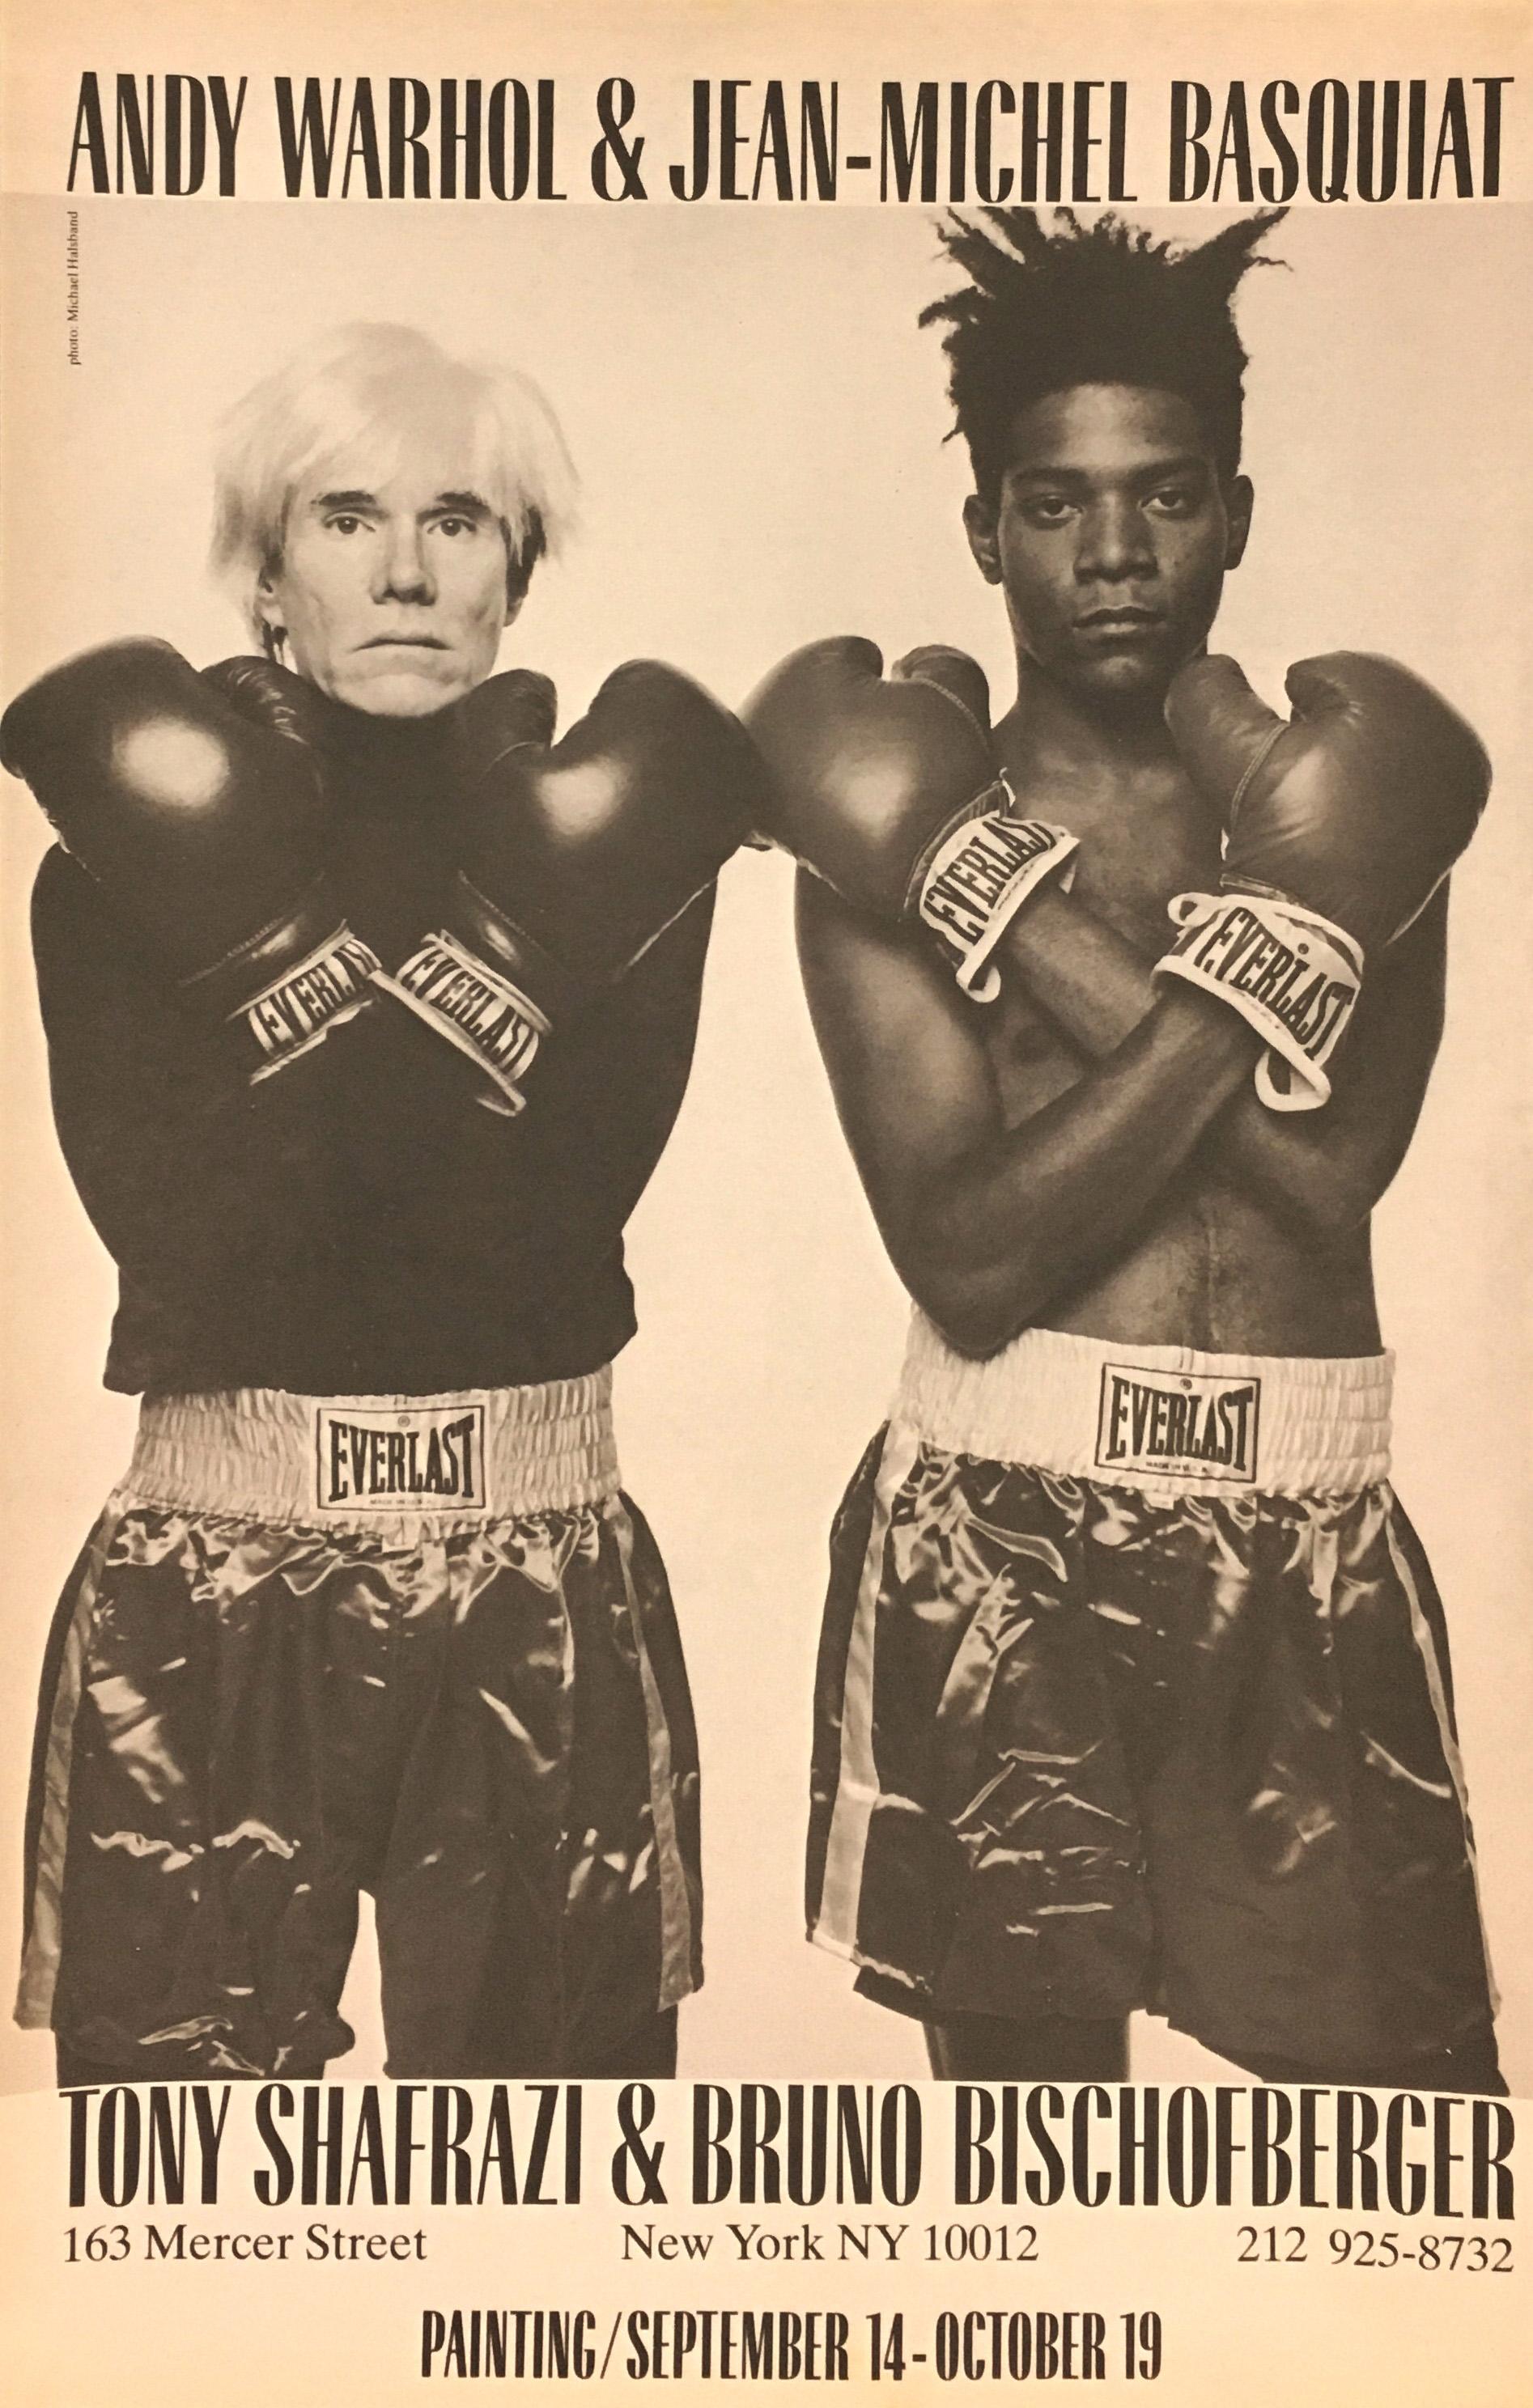 Warhol Basquiat Boxing-Werbung 1985 (Warhol Basquiat Boxing-Werbung 1985)  (Pop-Art), Photograph, von Michael Halsband